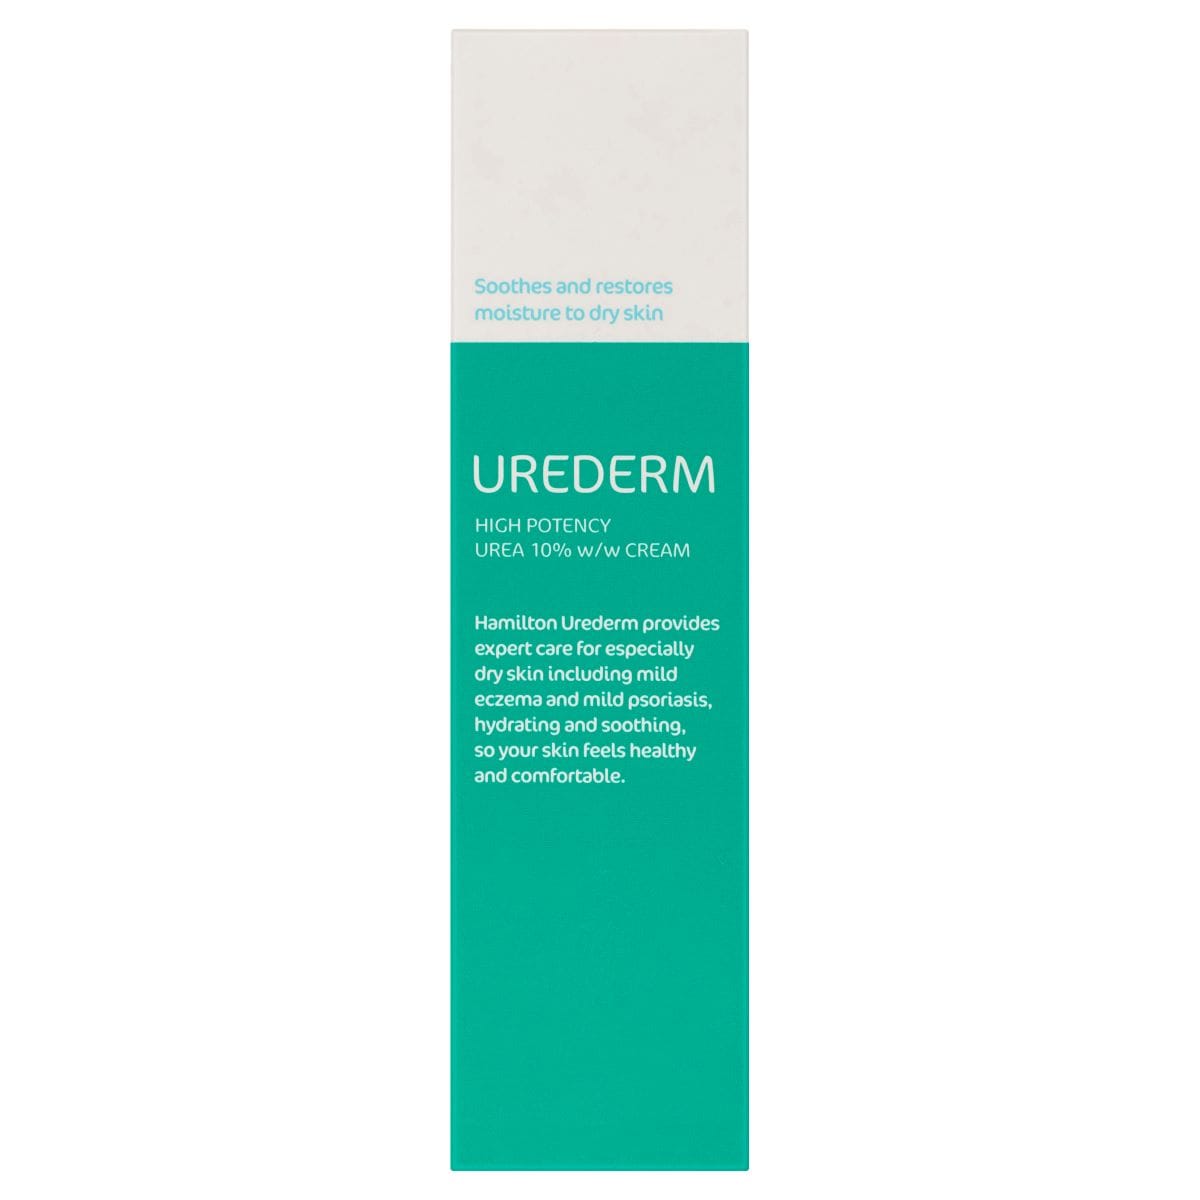 Hamilton Urederm Cream 10% 100g